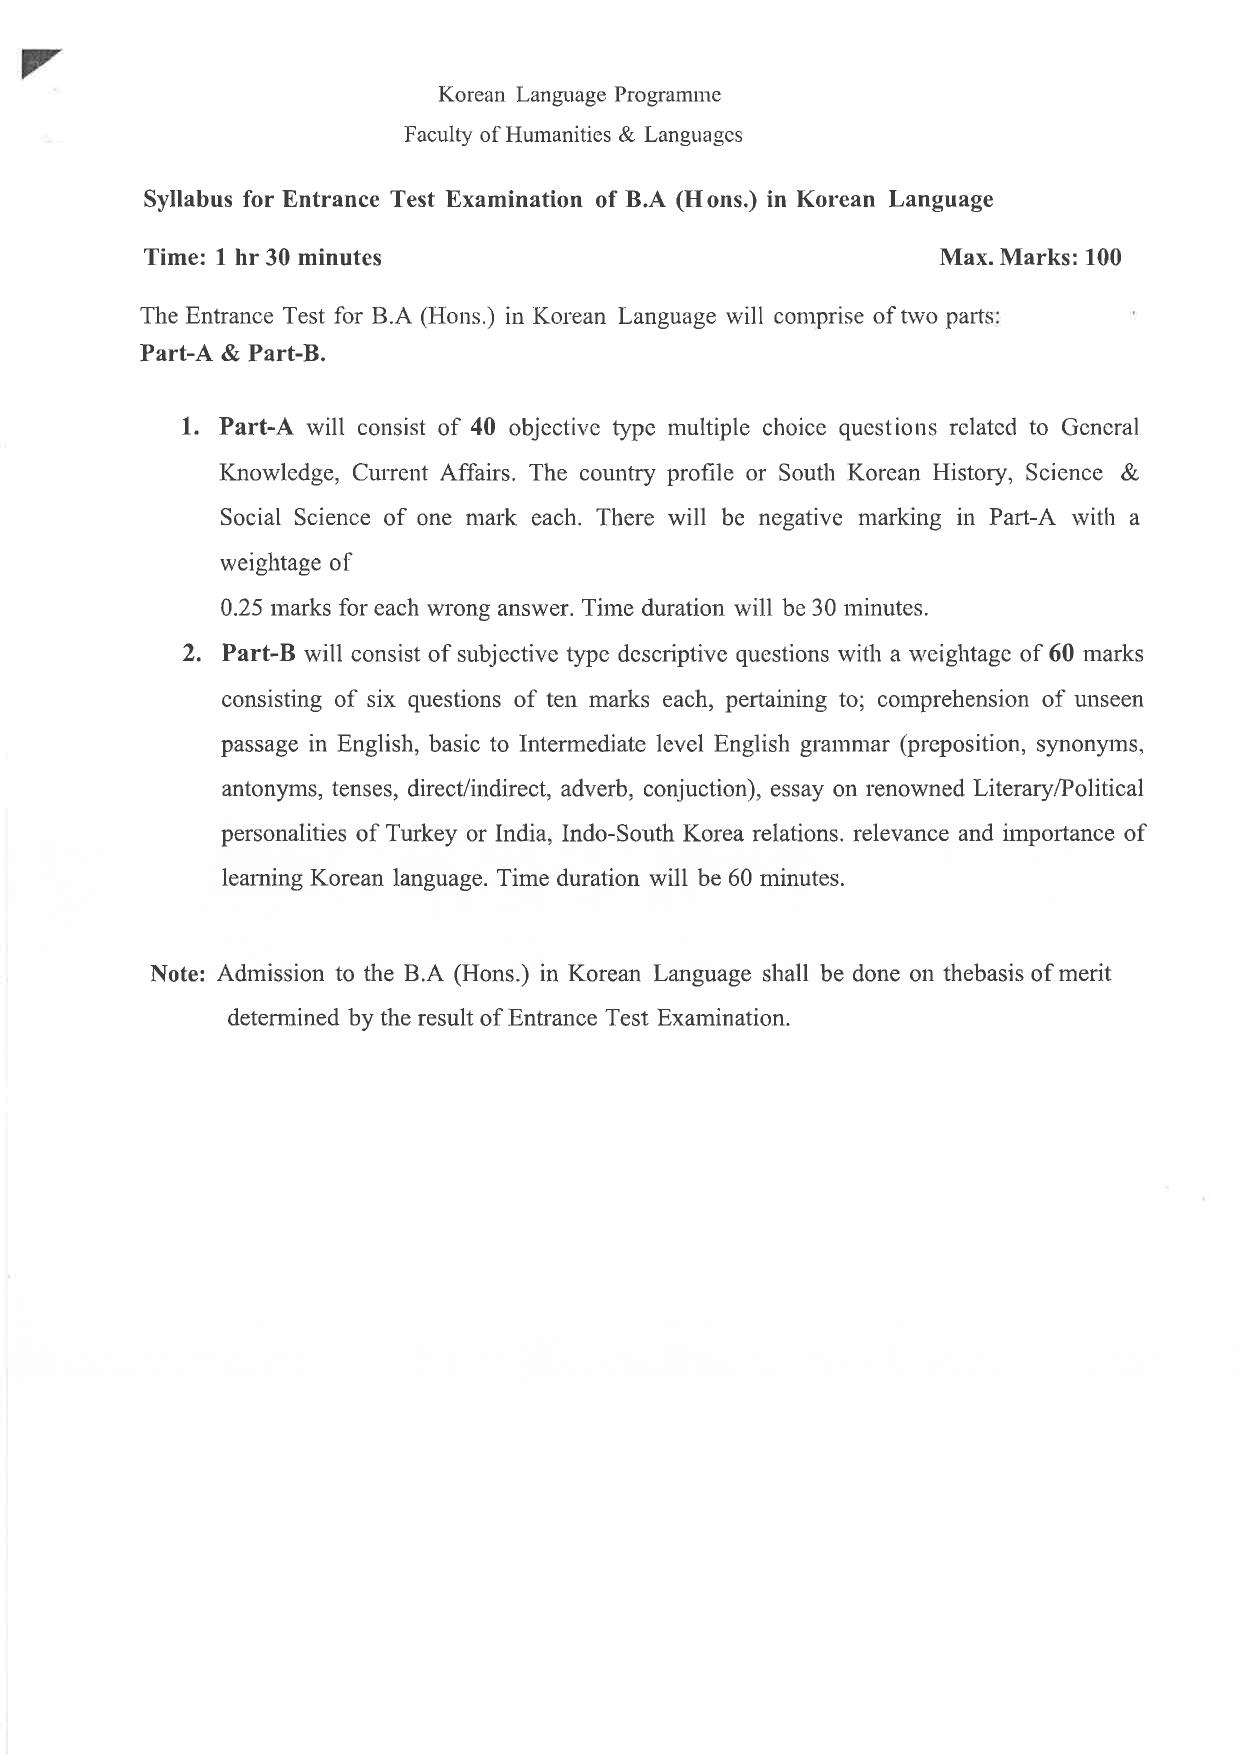 JMI Entrance Exam B58-B.A. (Hons) Korean Language Syllabus - Page 2